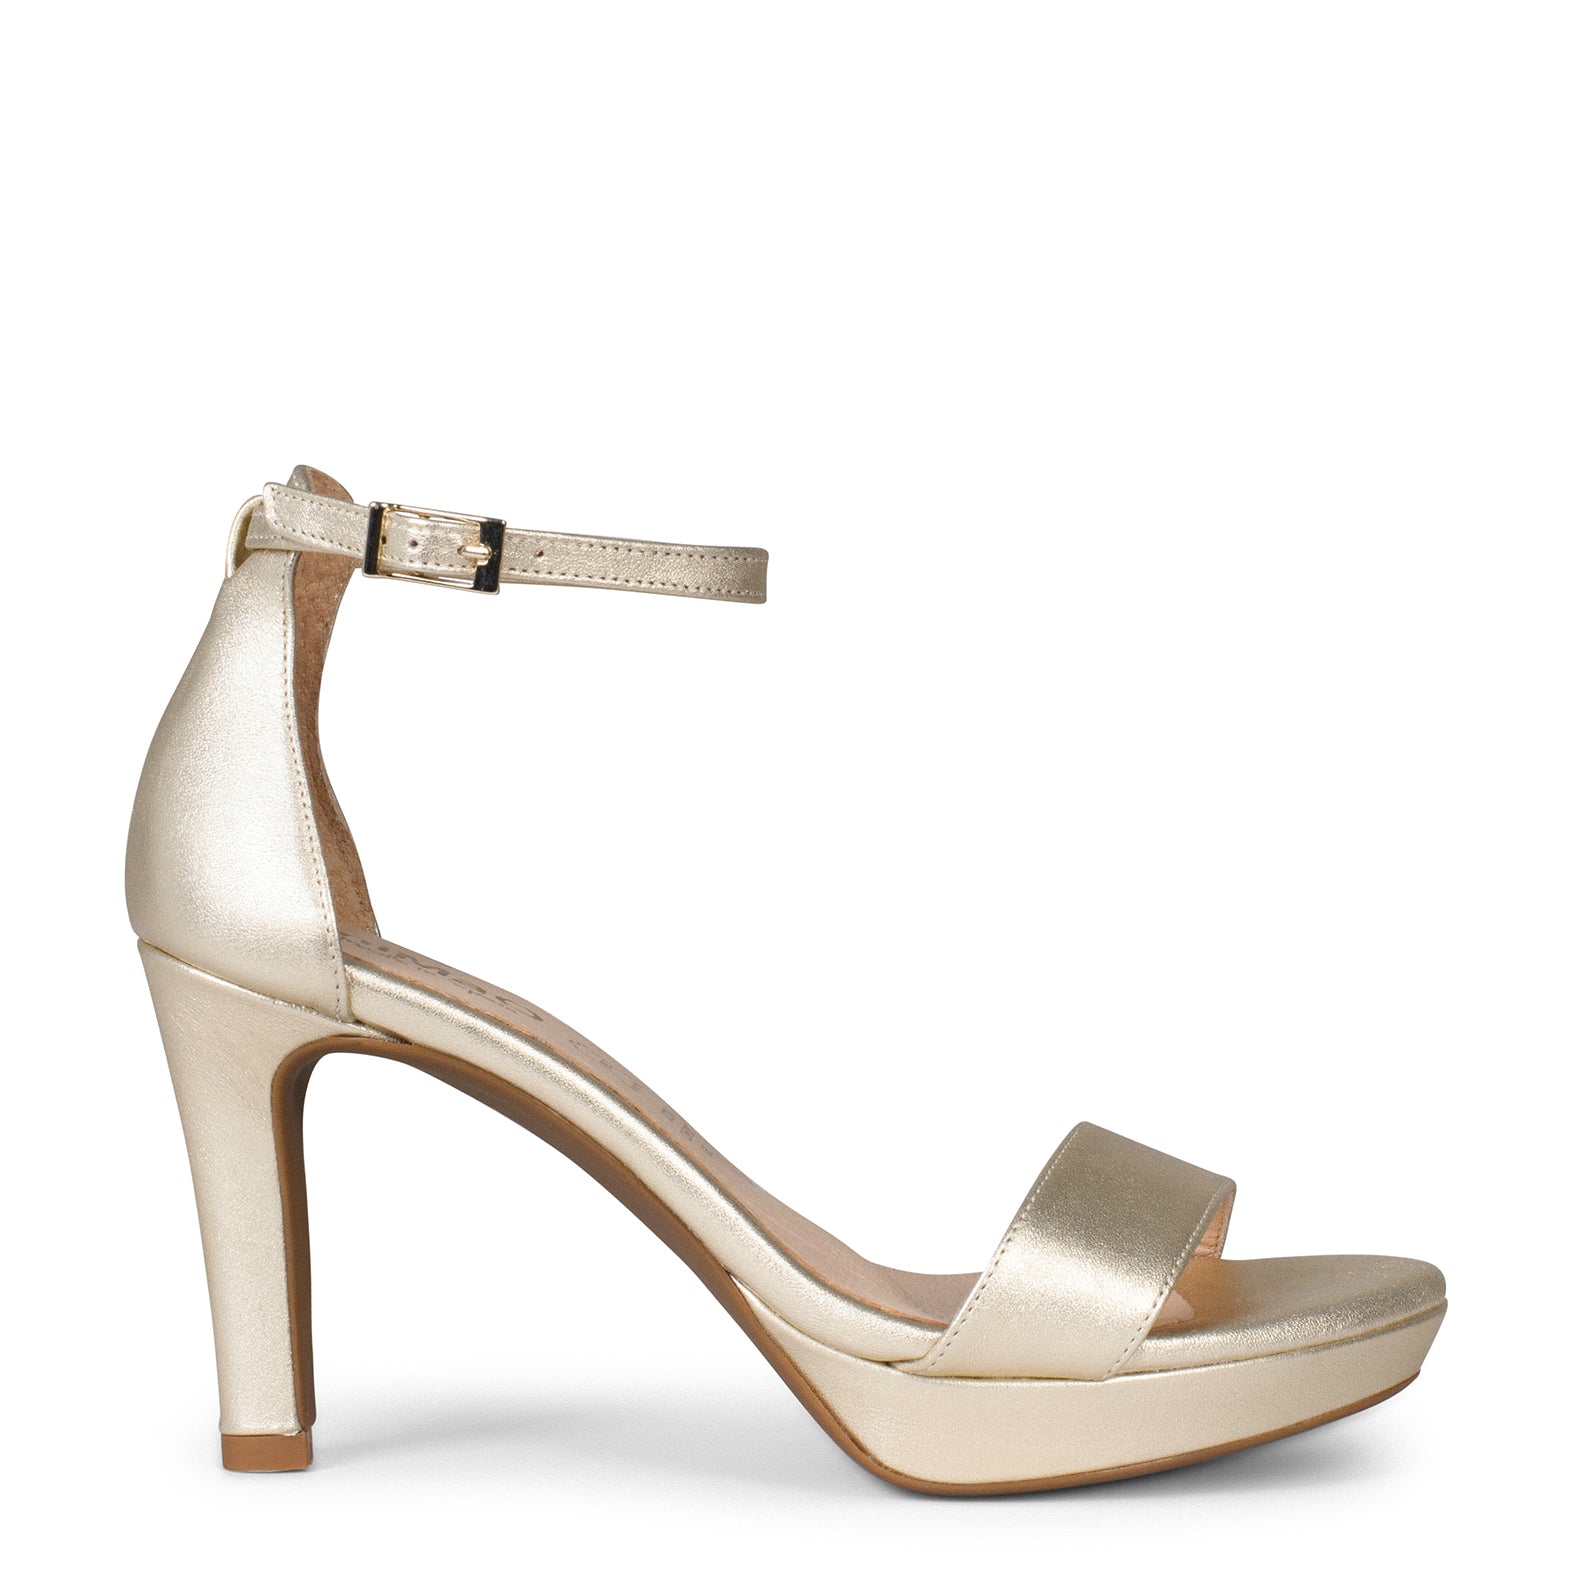 PARTY – GOLDEN high-heeled platform sandals